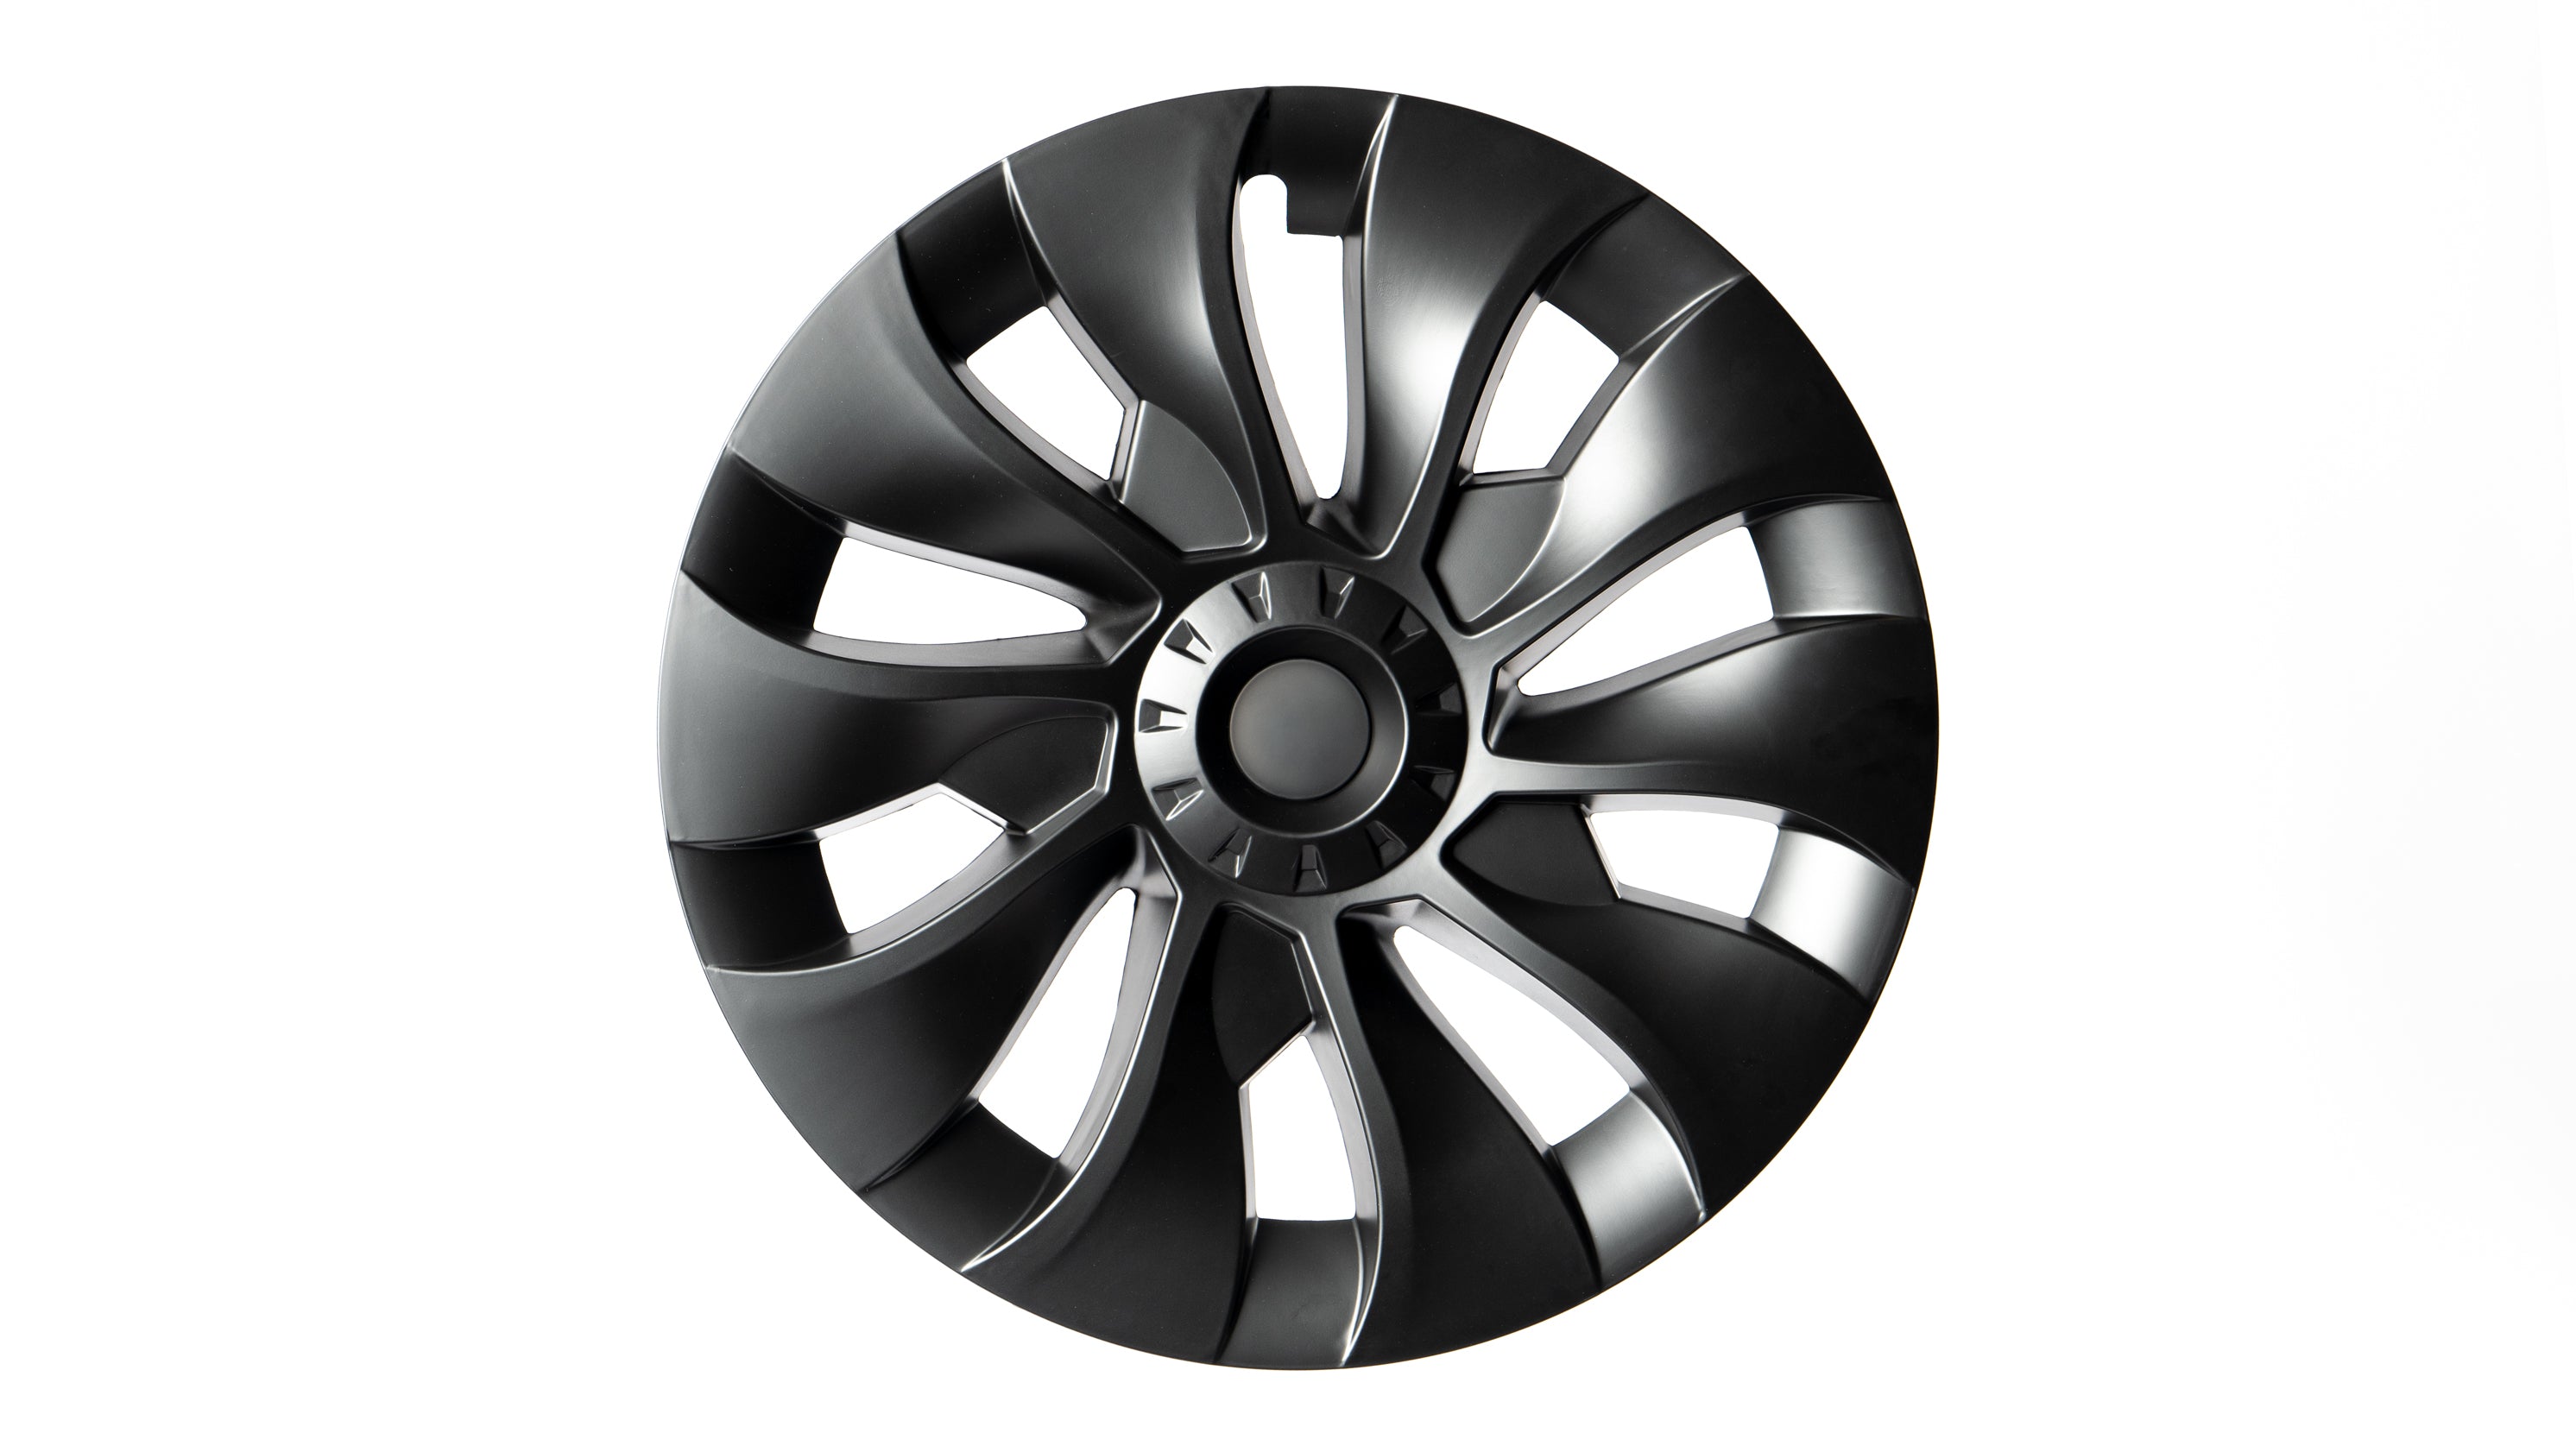 Performance hubcaps in turbine design for the Tesla Model 3